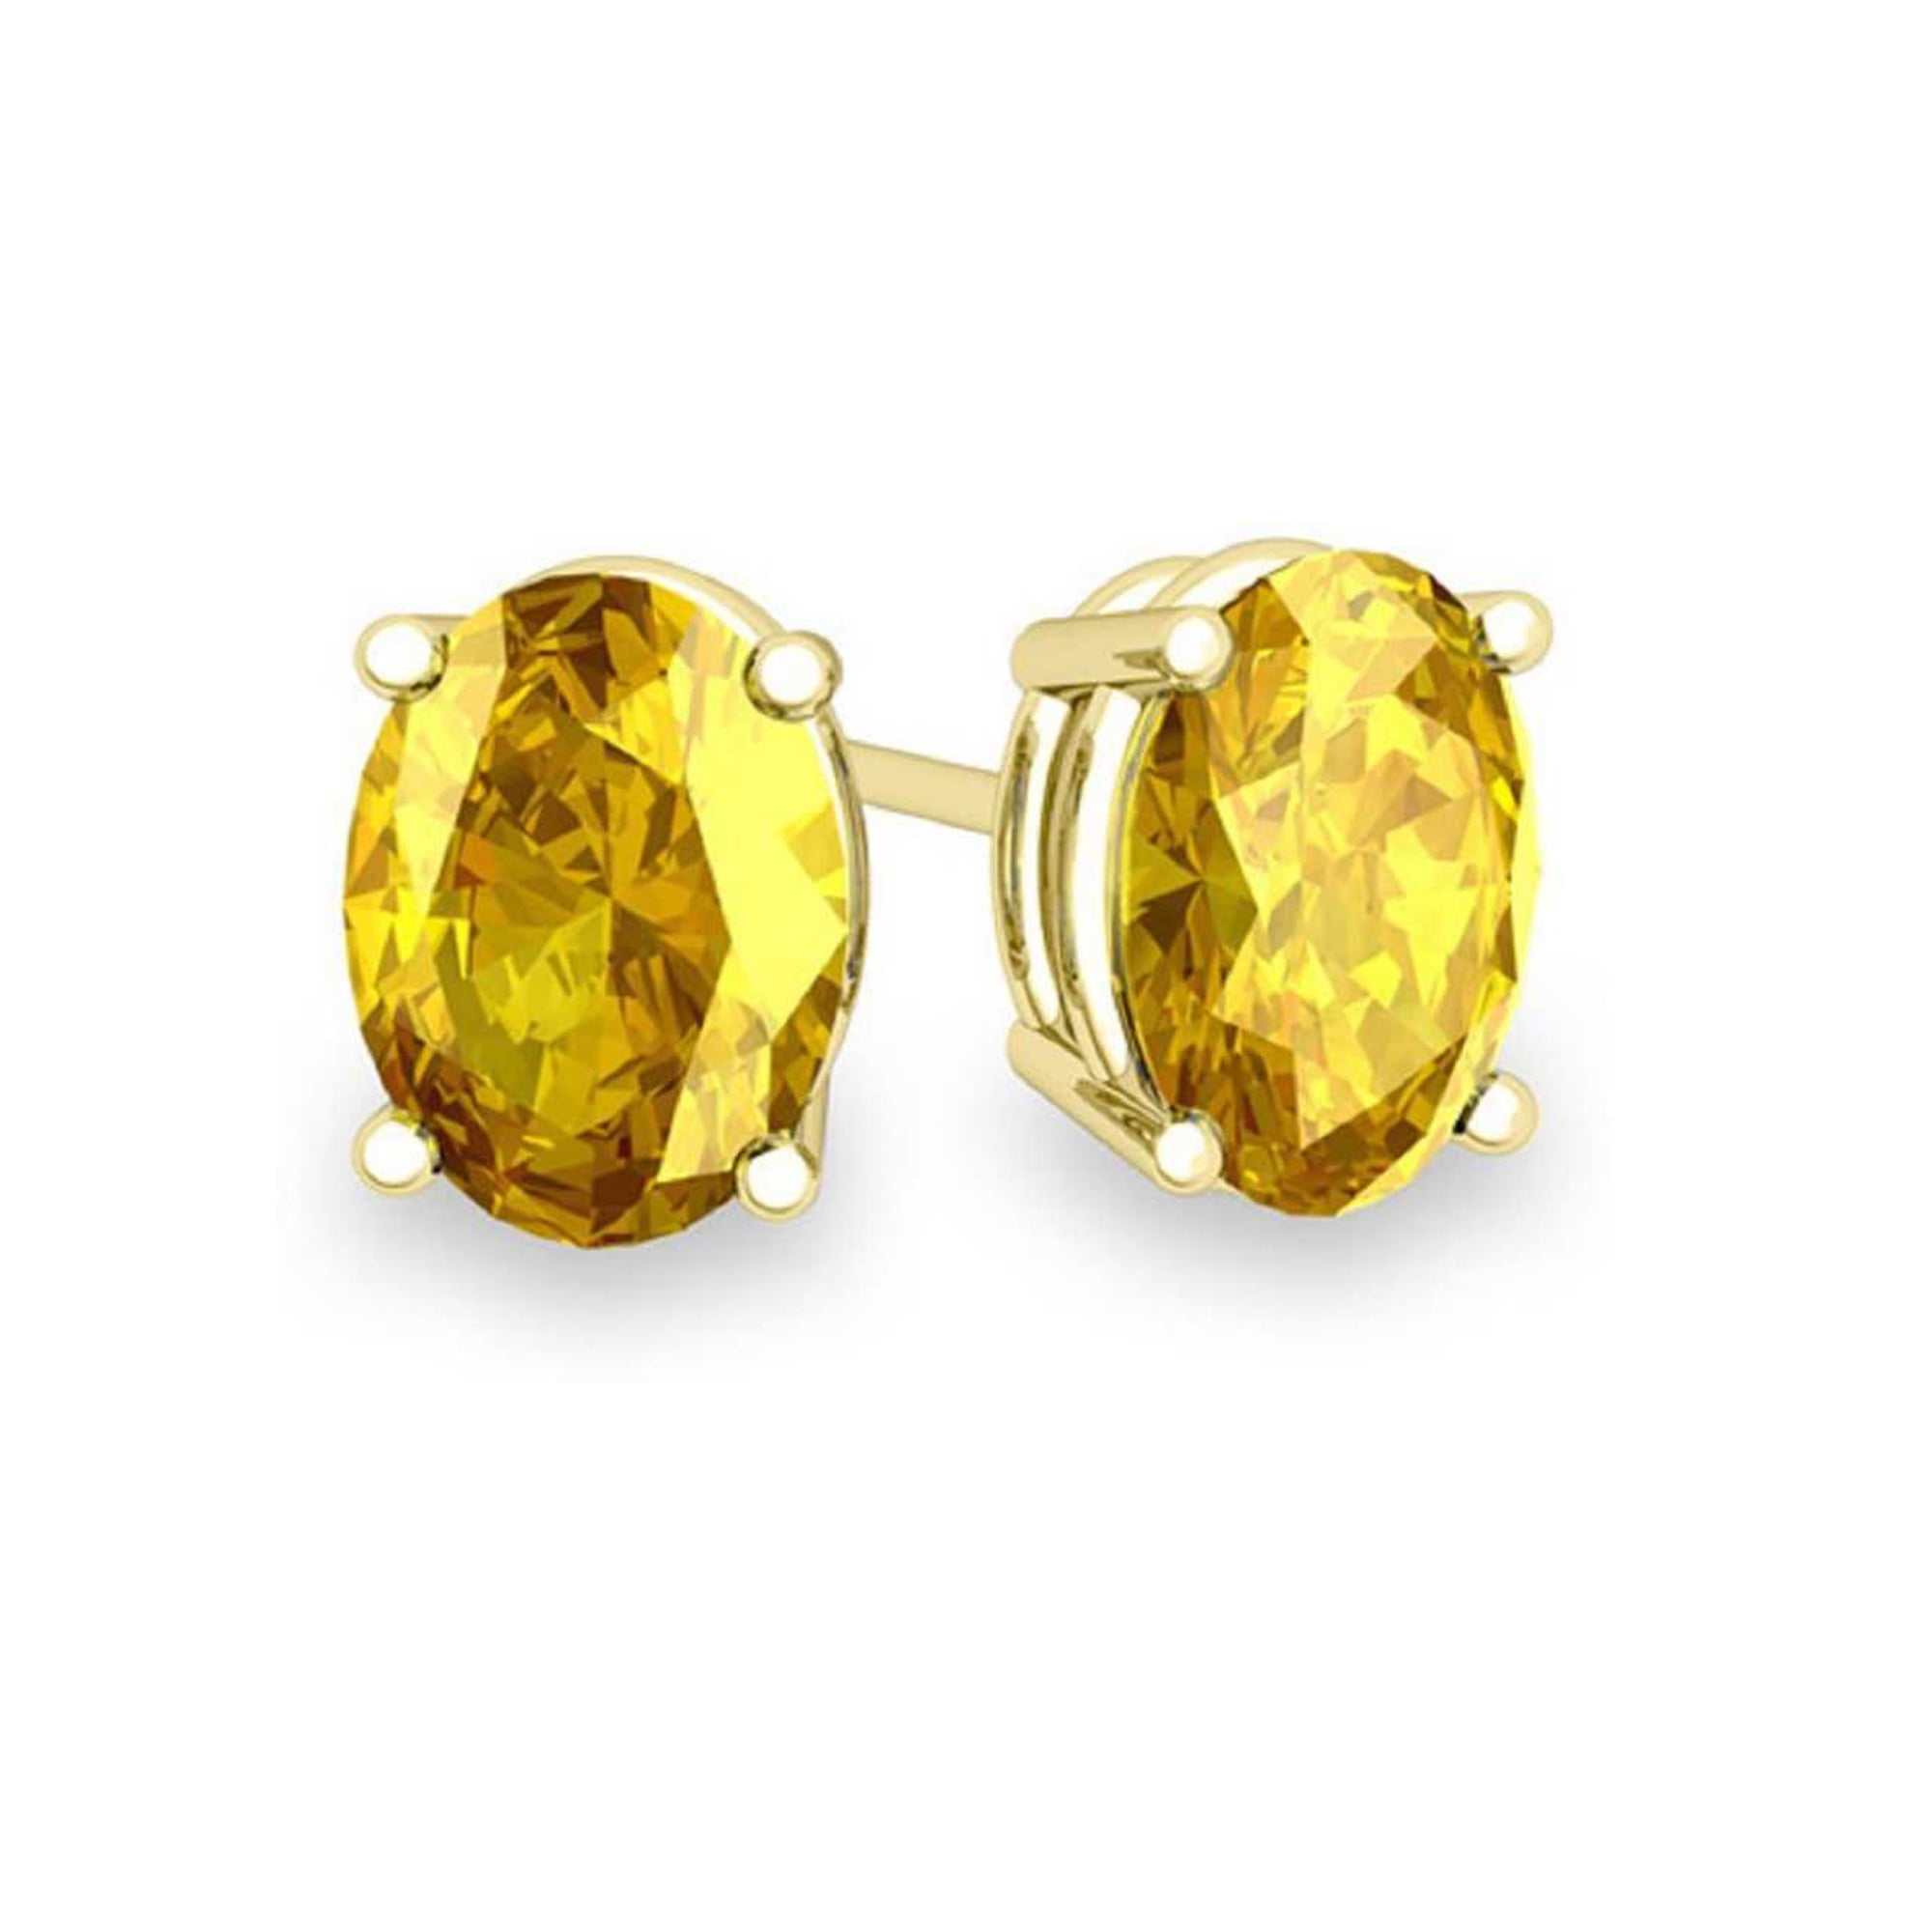 Jewel Tie 10k Yellow Gold Diamond-Cut 3mm Round Hoop Earrings 